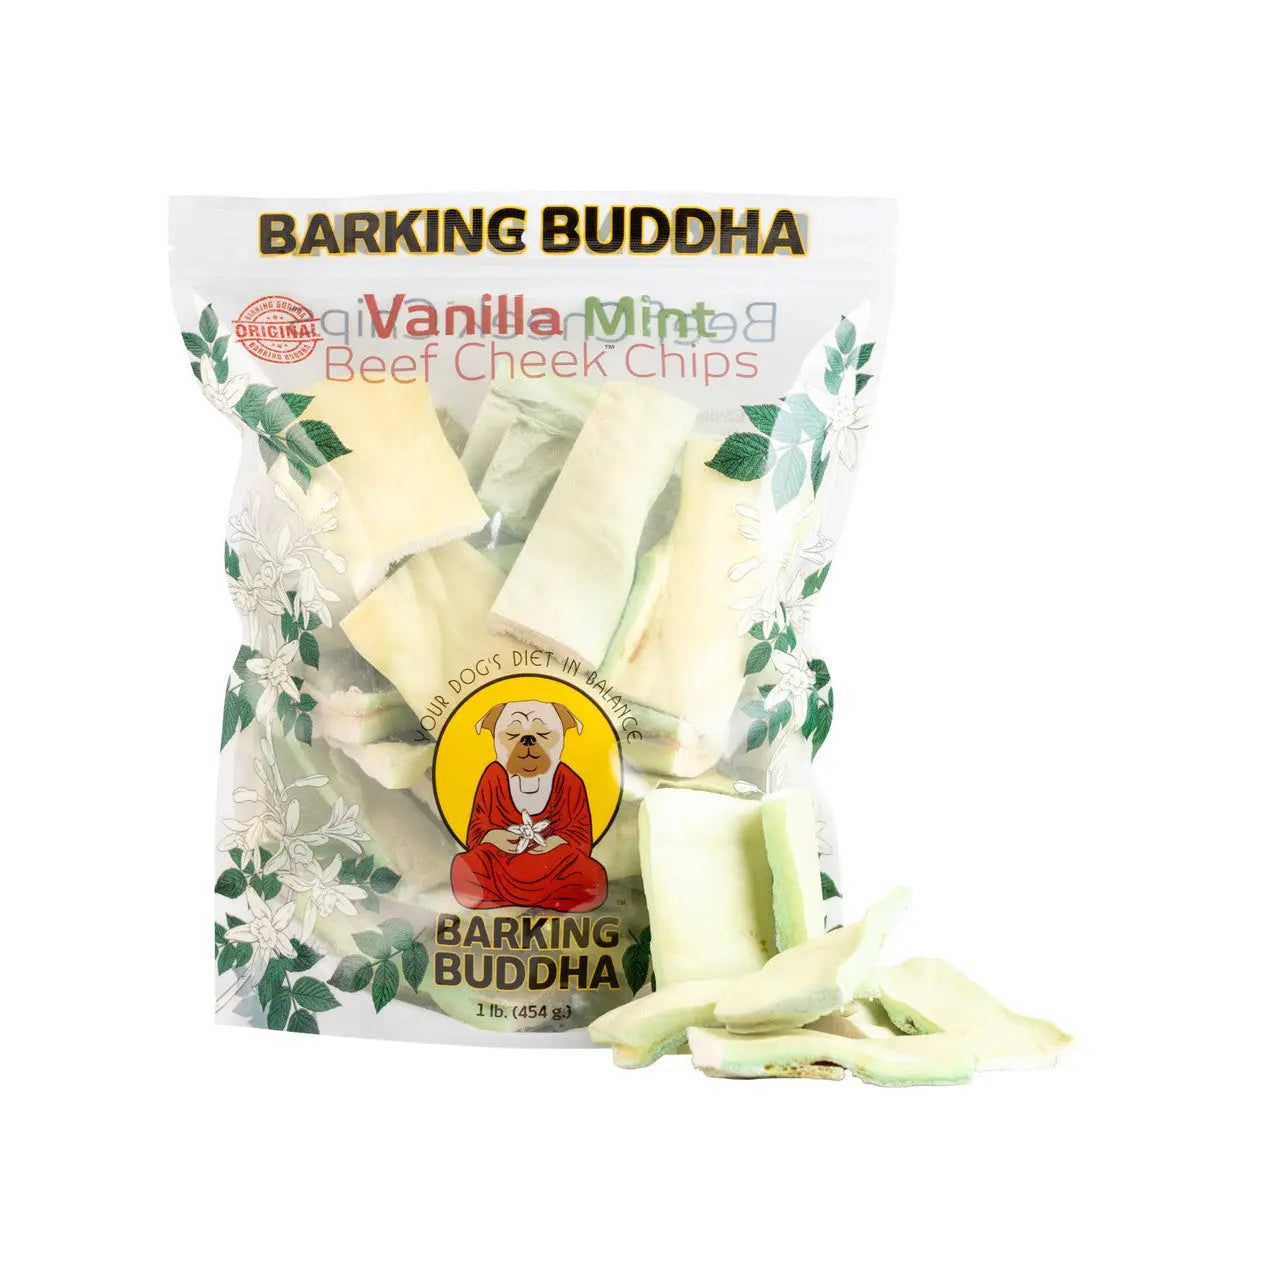 Barking Buddha Vanilla Mint Beef Cheek Chips 1 lb. Value Bag Barking Buddha